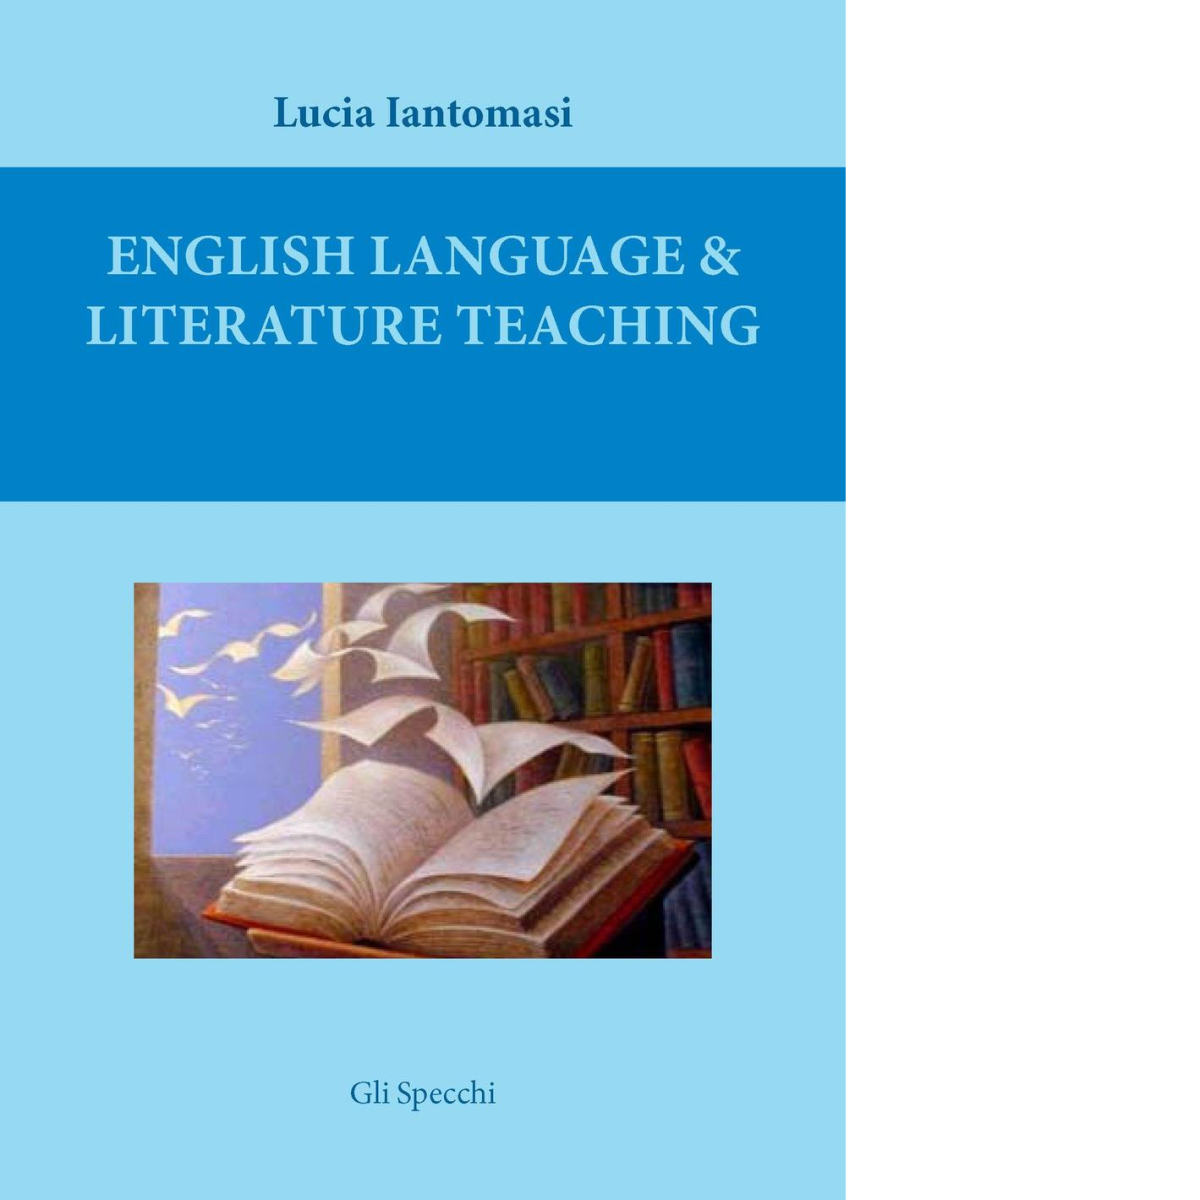 English language & literature teaching di Iantomasi Lucia - Del faro, 2016